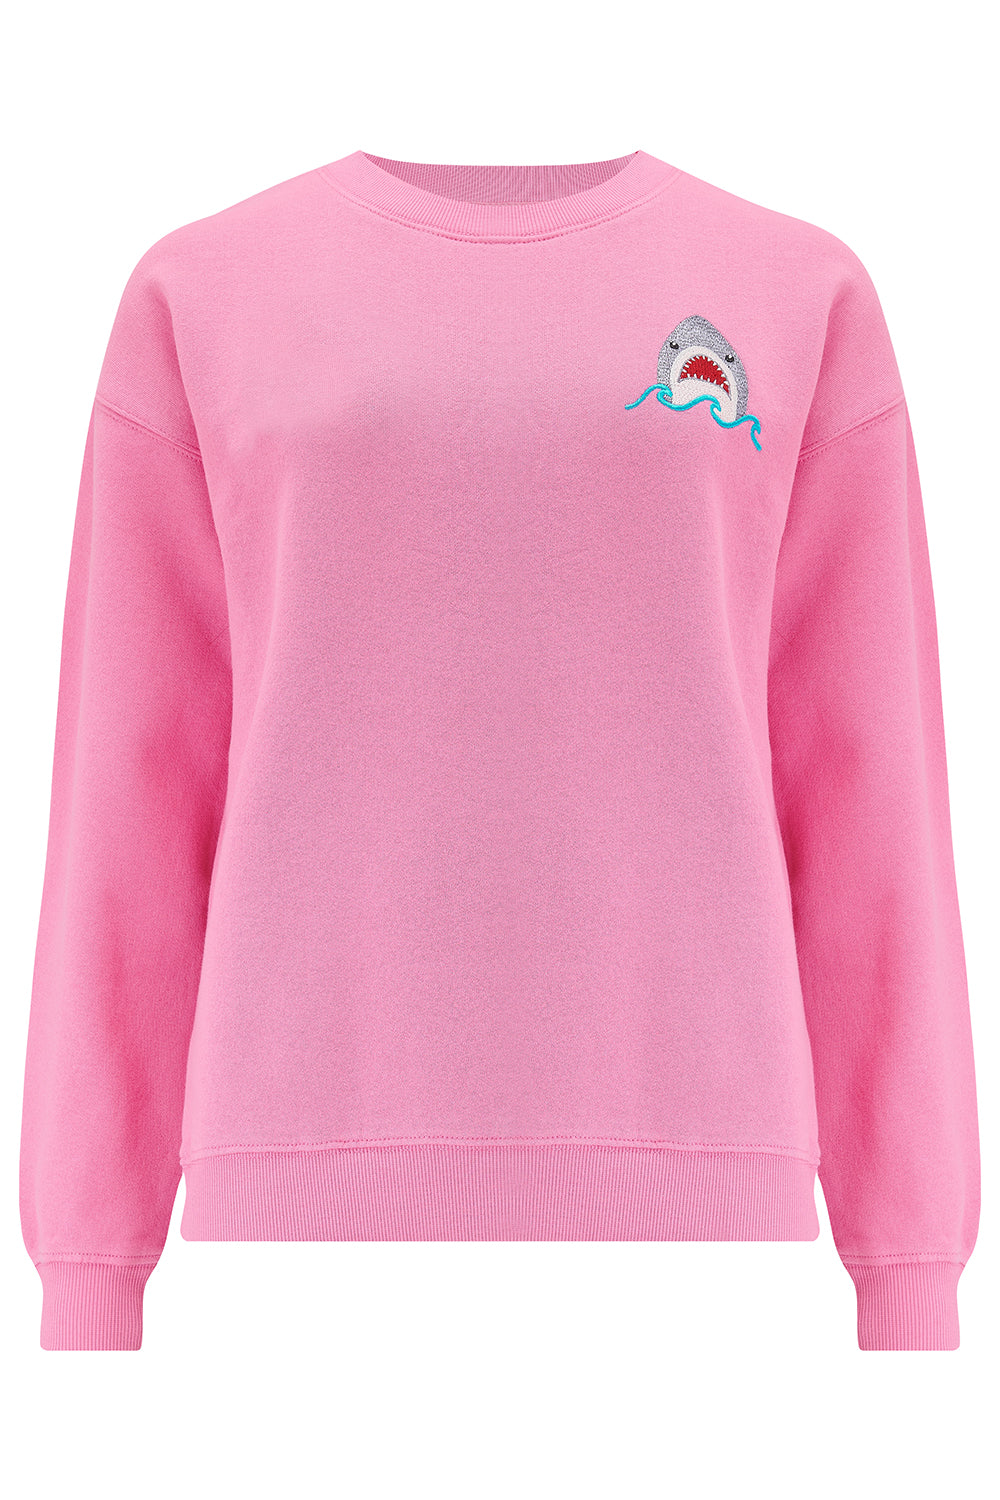 Sugarhill - Noah Pink Shark sweatshirt